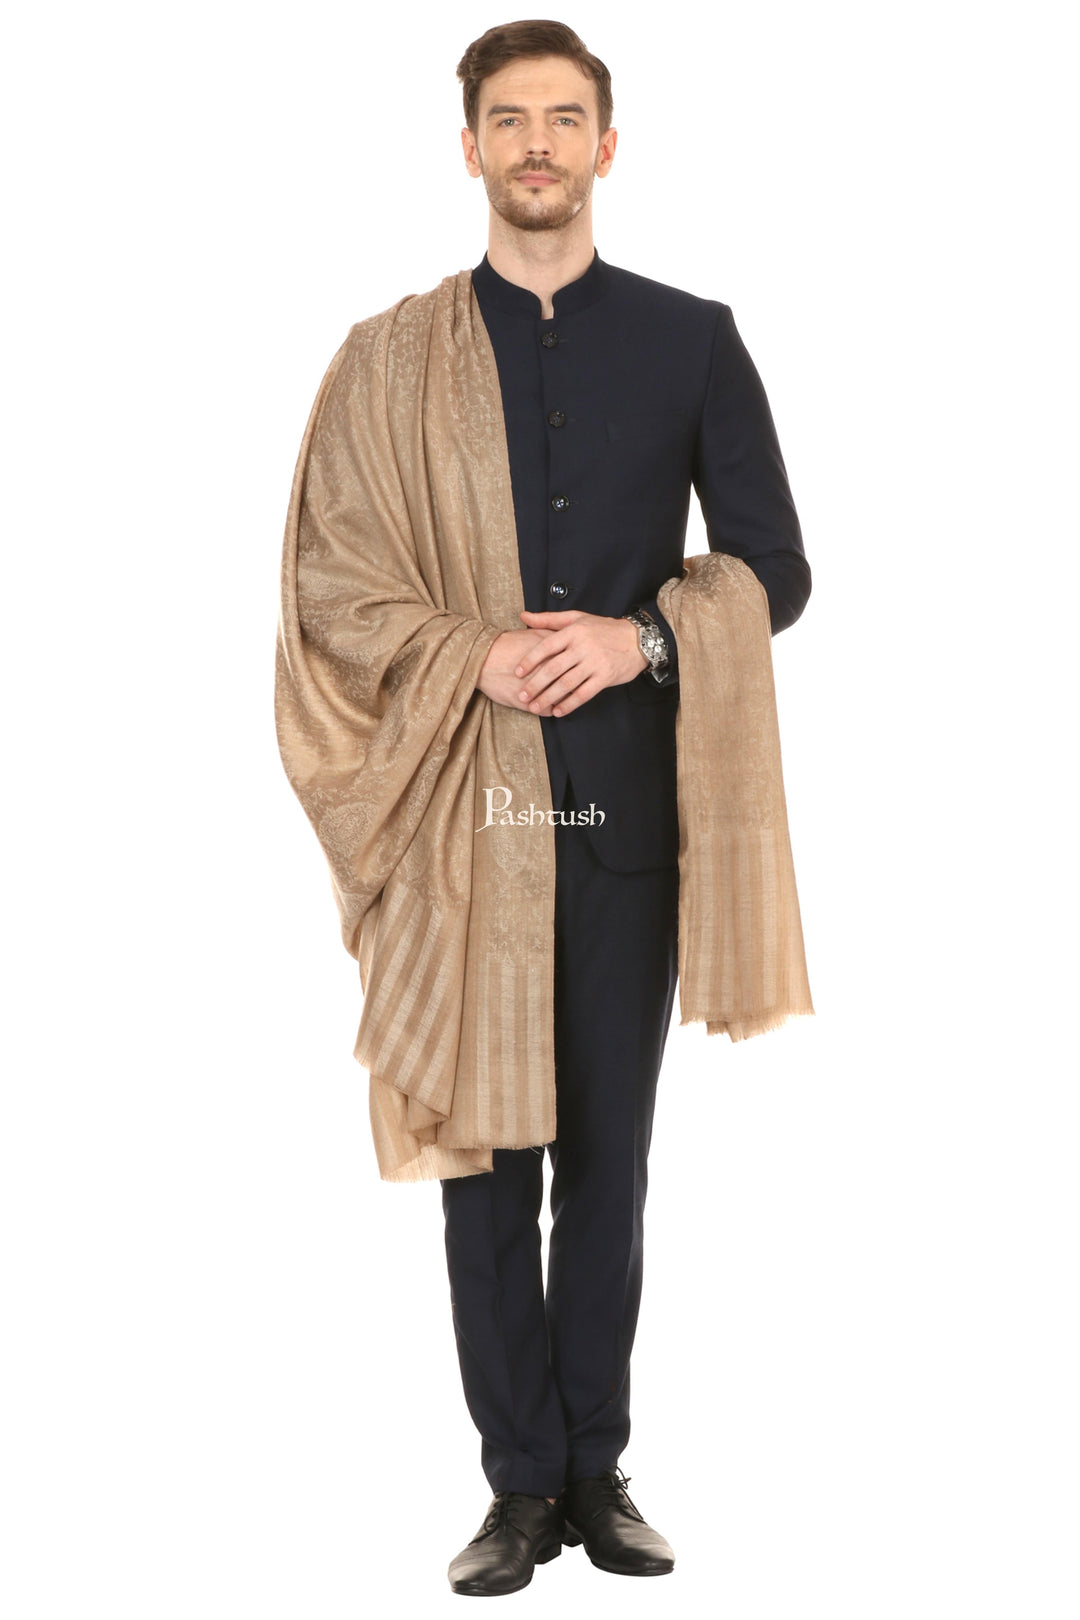 Pashtush India Mens Shawls Gents Shawl Pashtush Mens Shawl, Fine Wool Jacquard Weave, Soft And Light Weight